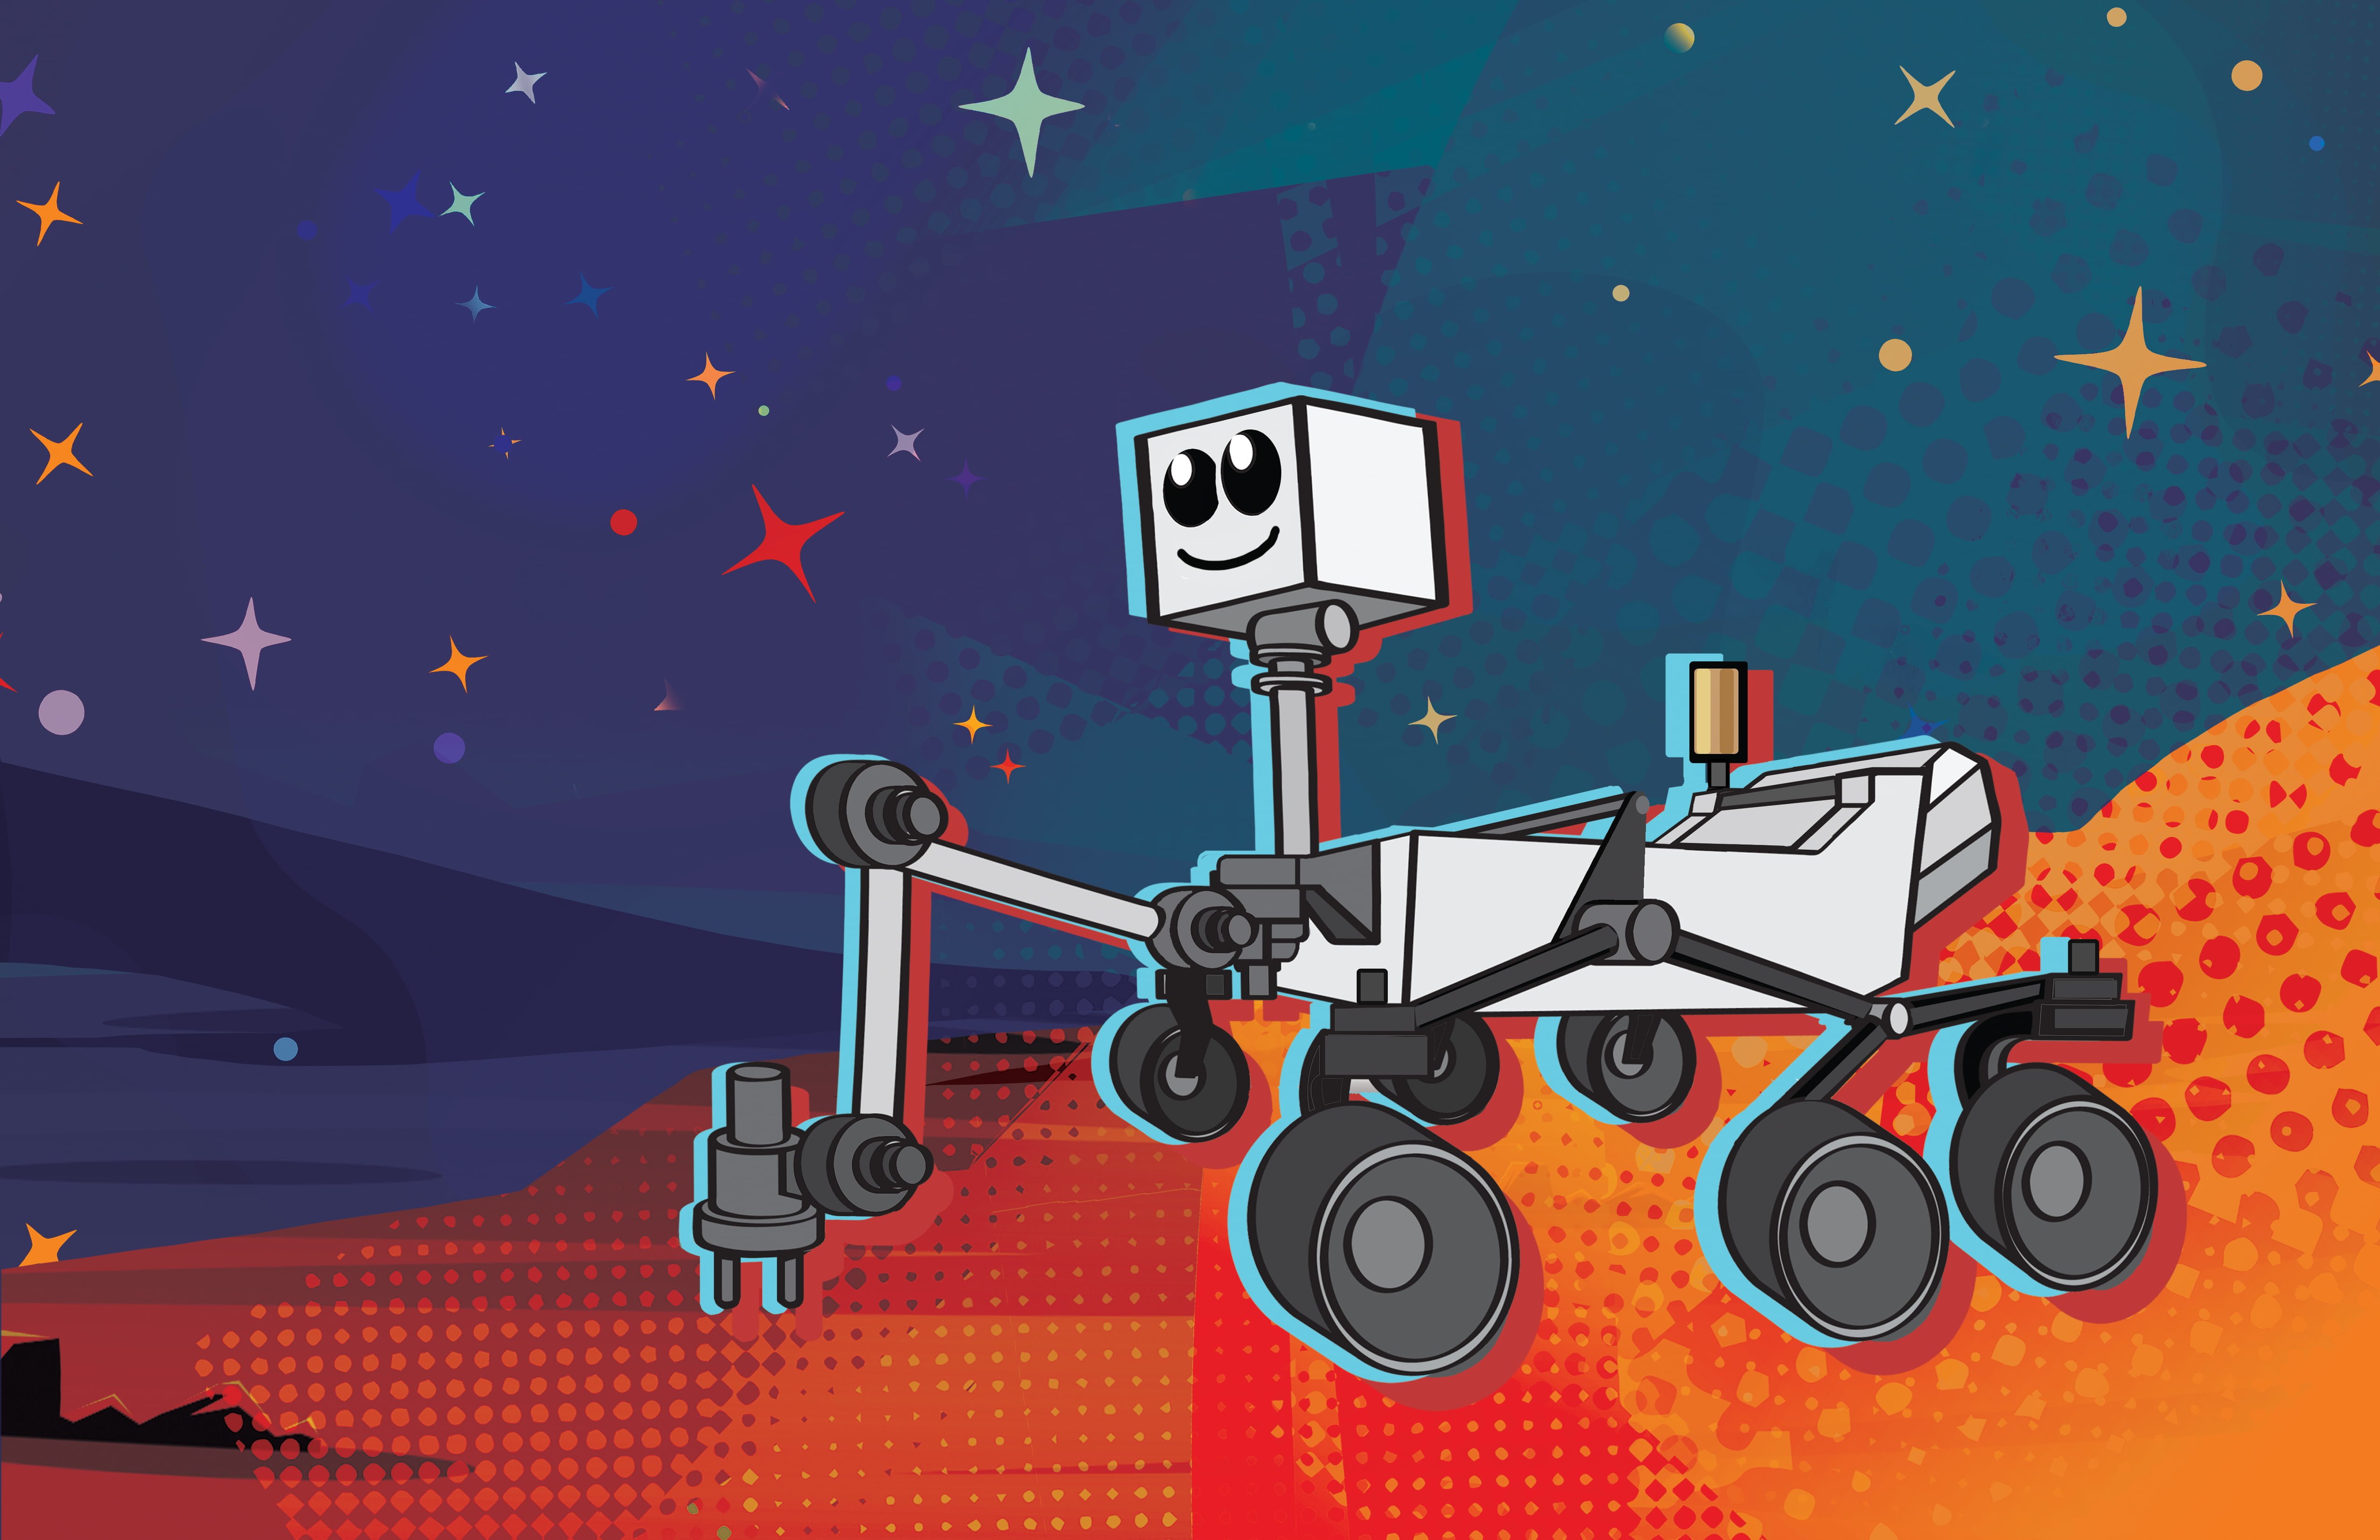 NASA Help Name The 2020 Mars Rover